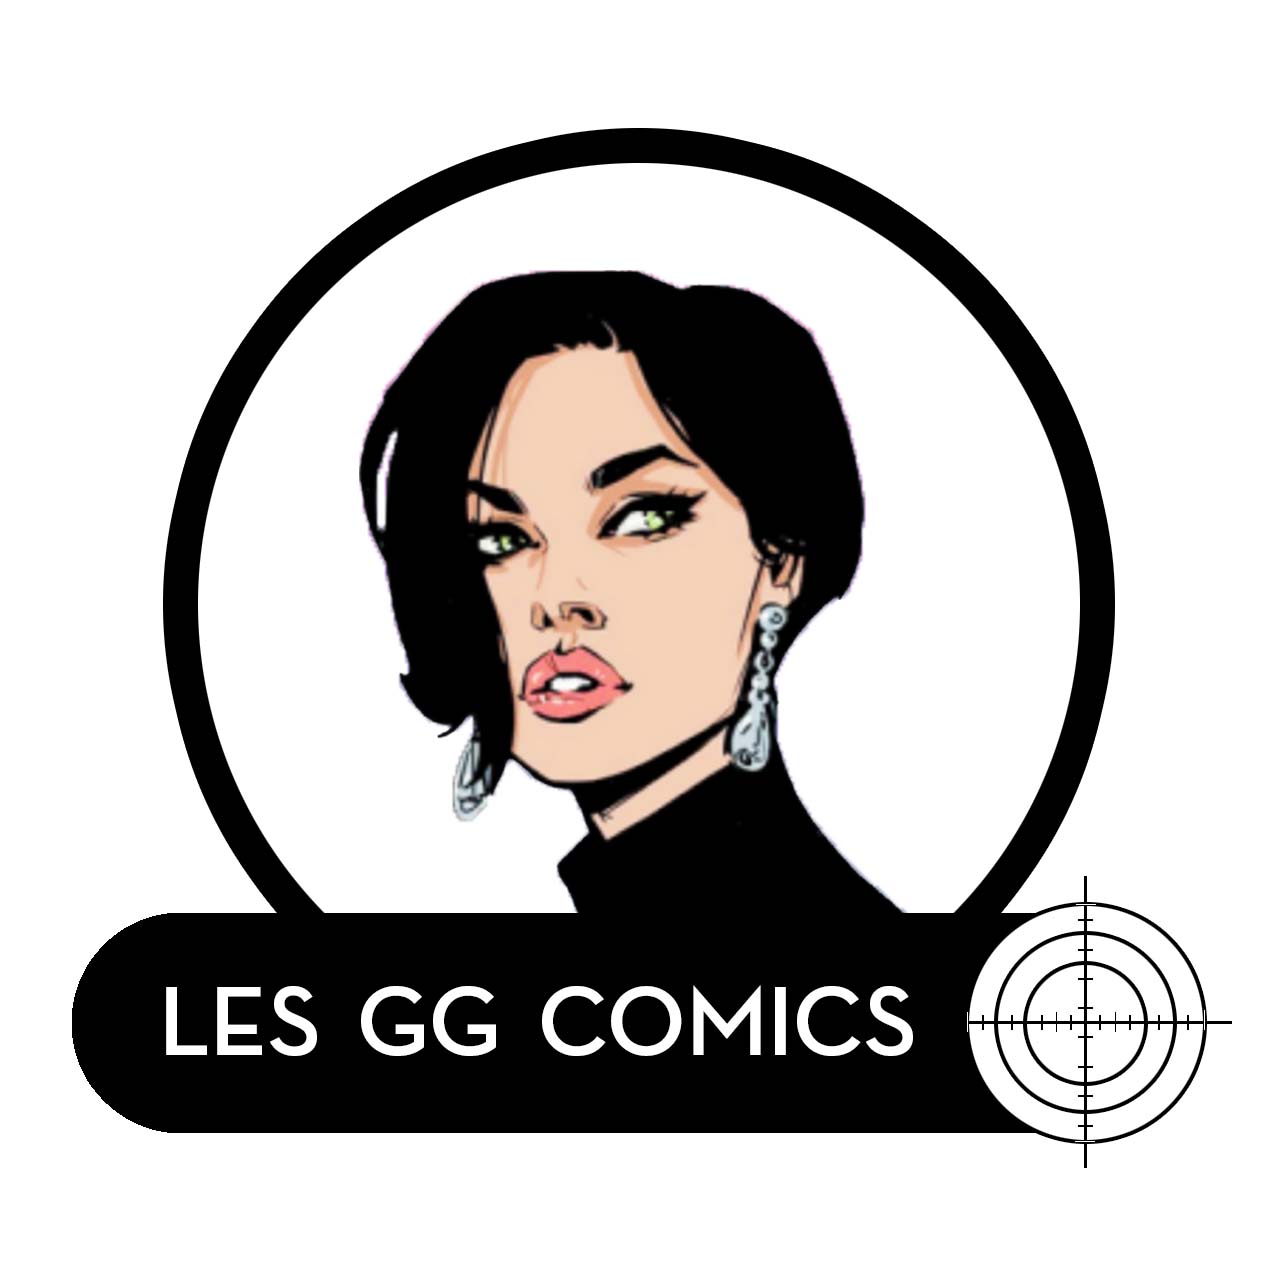 Les GG comics HS #4 : ITW de JOËLLE JONES